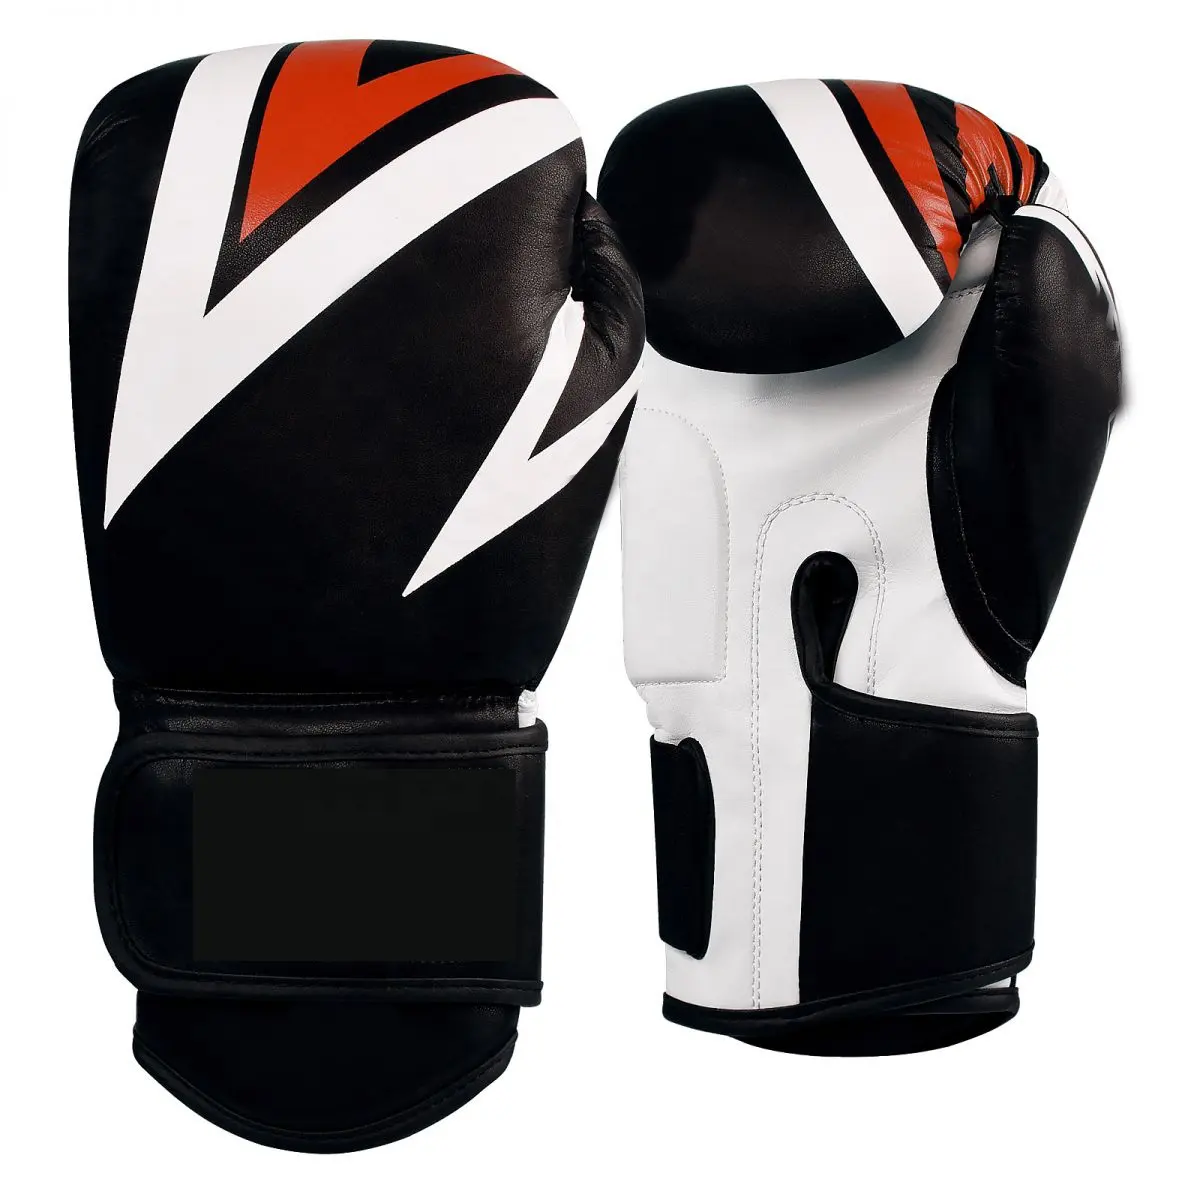 Luvas de boxe profissional MMA Muay Thai com design personalizado luvas de boxe feitas de couro genuíno